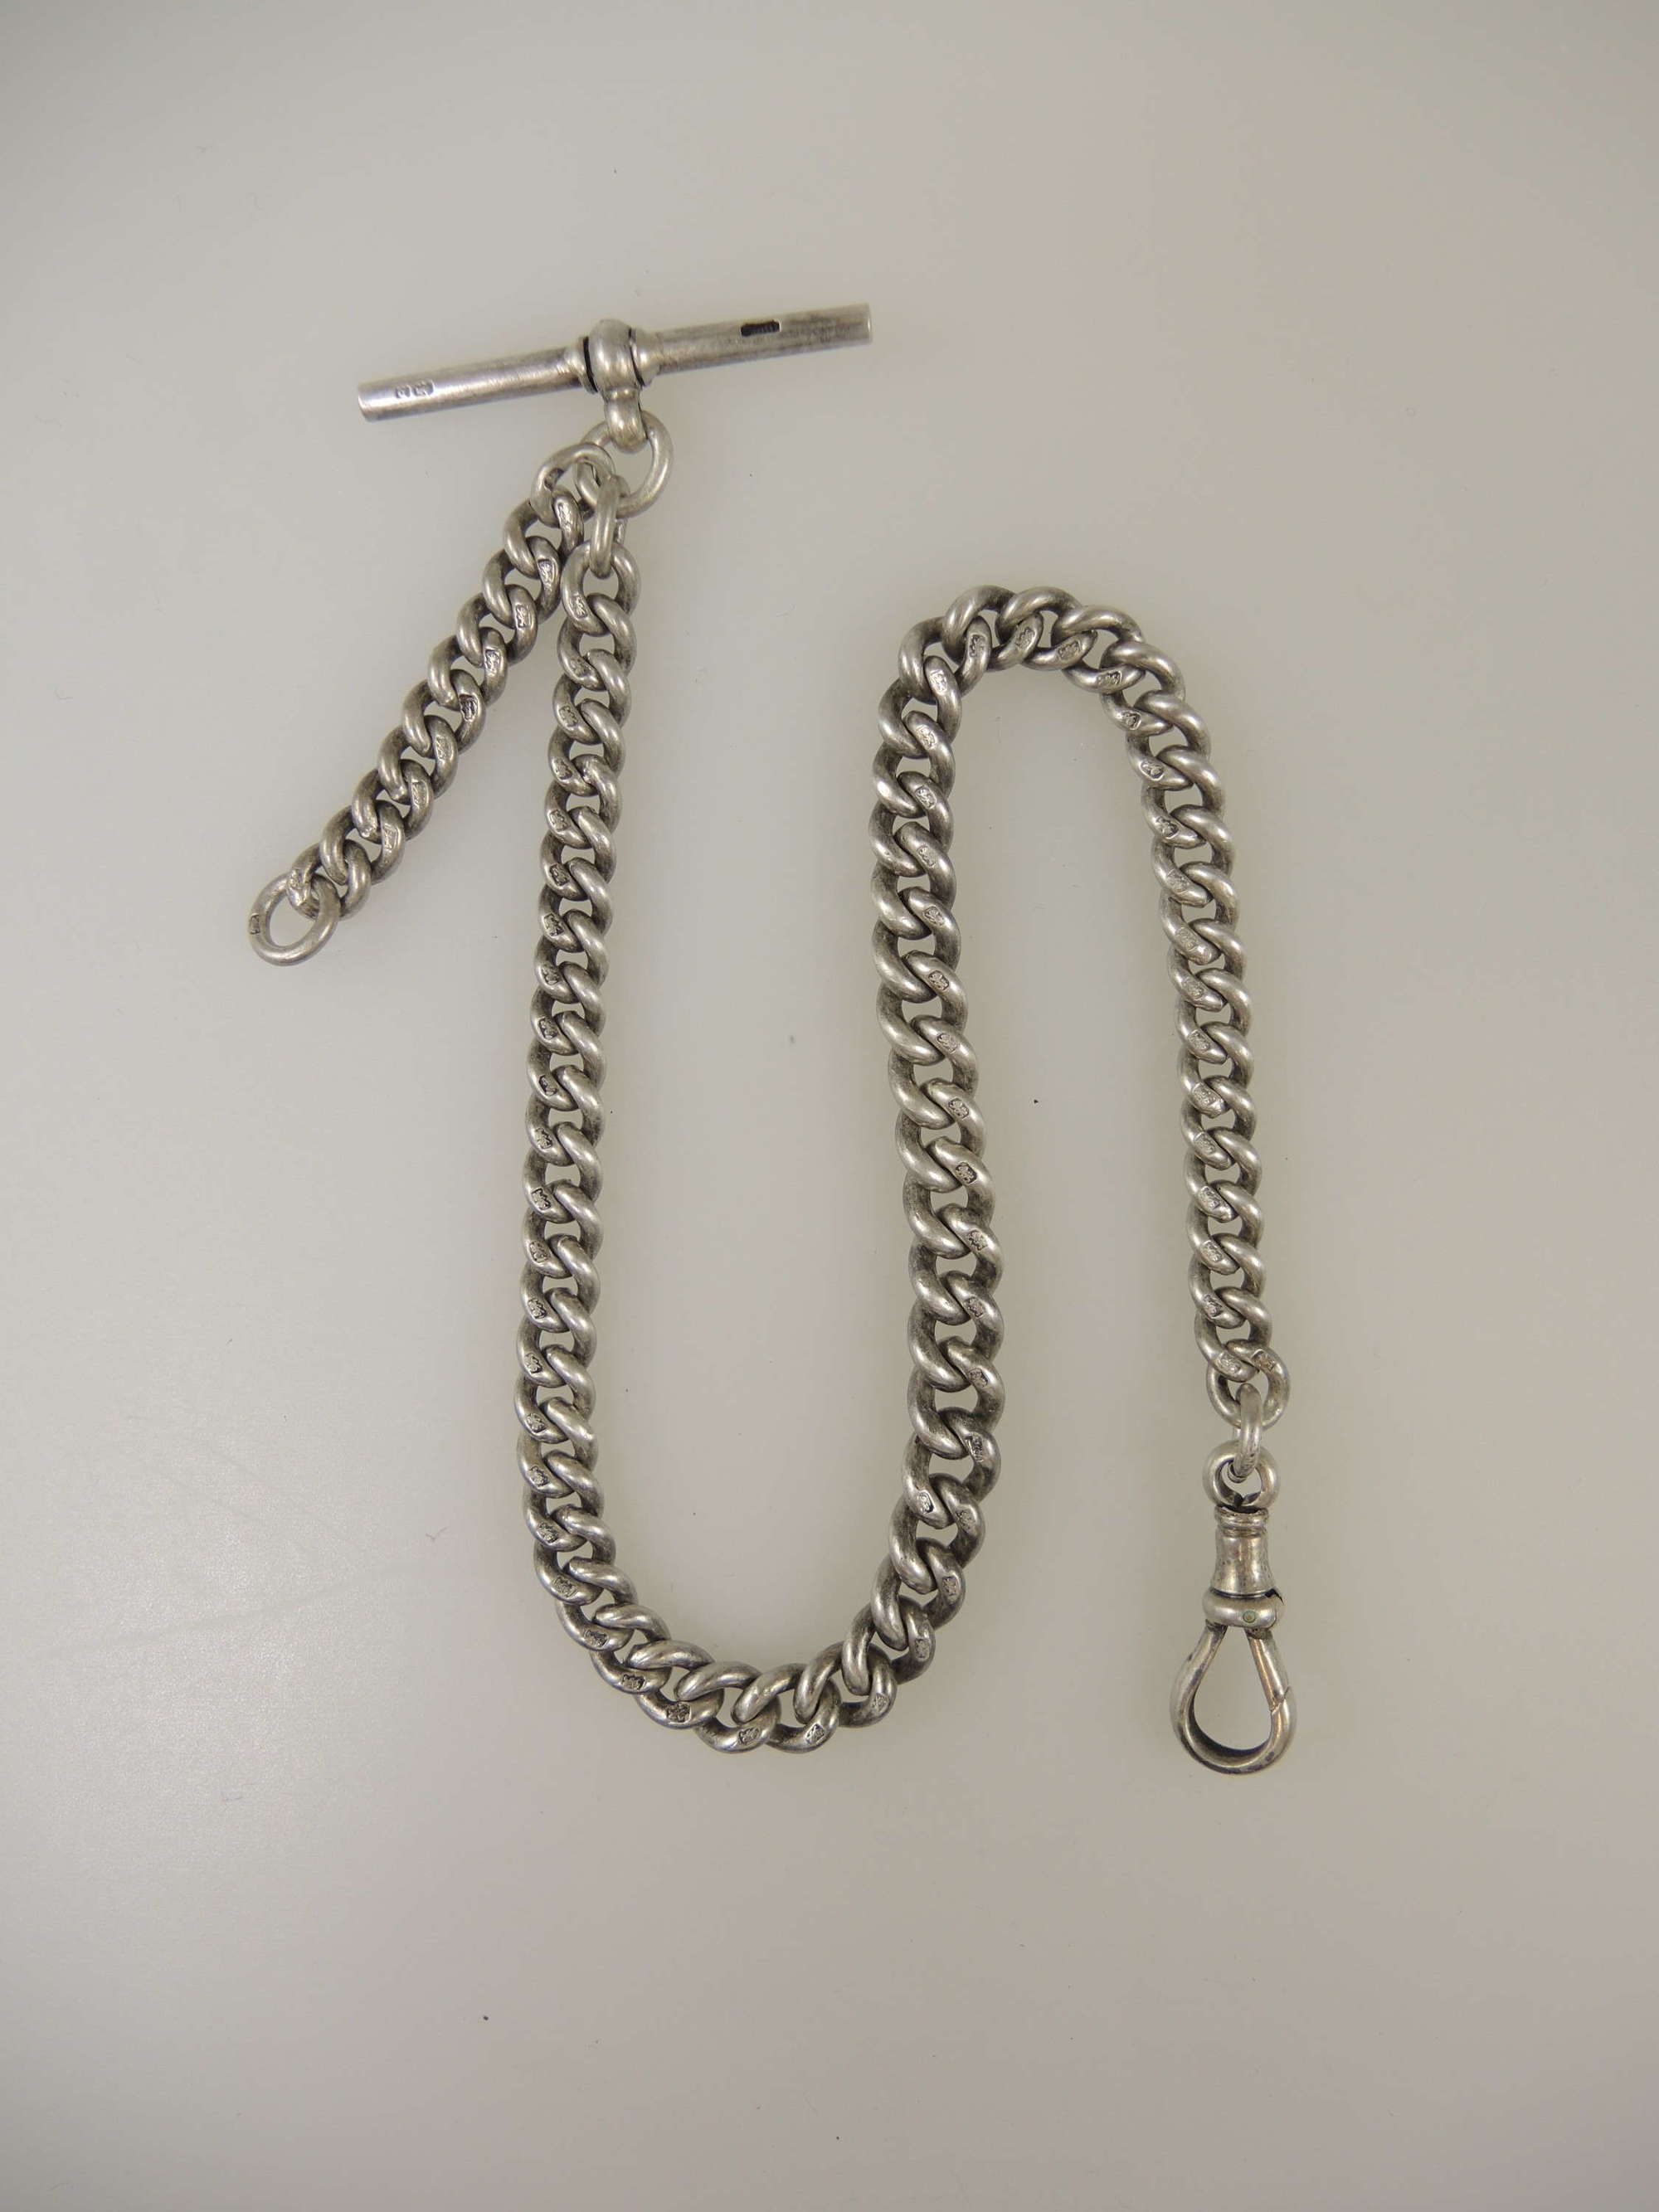 Good quality English silver pocket watch chain c1901